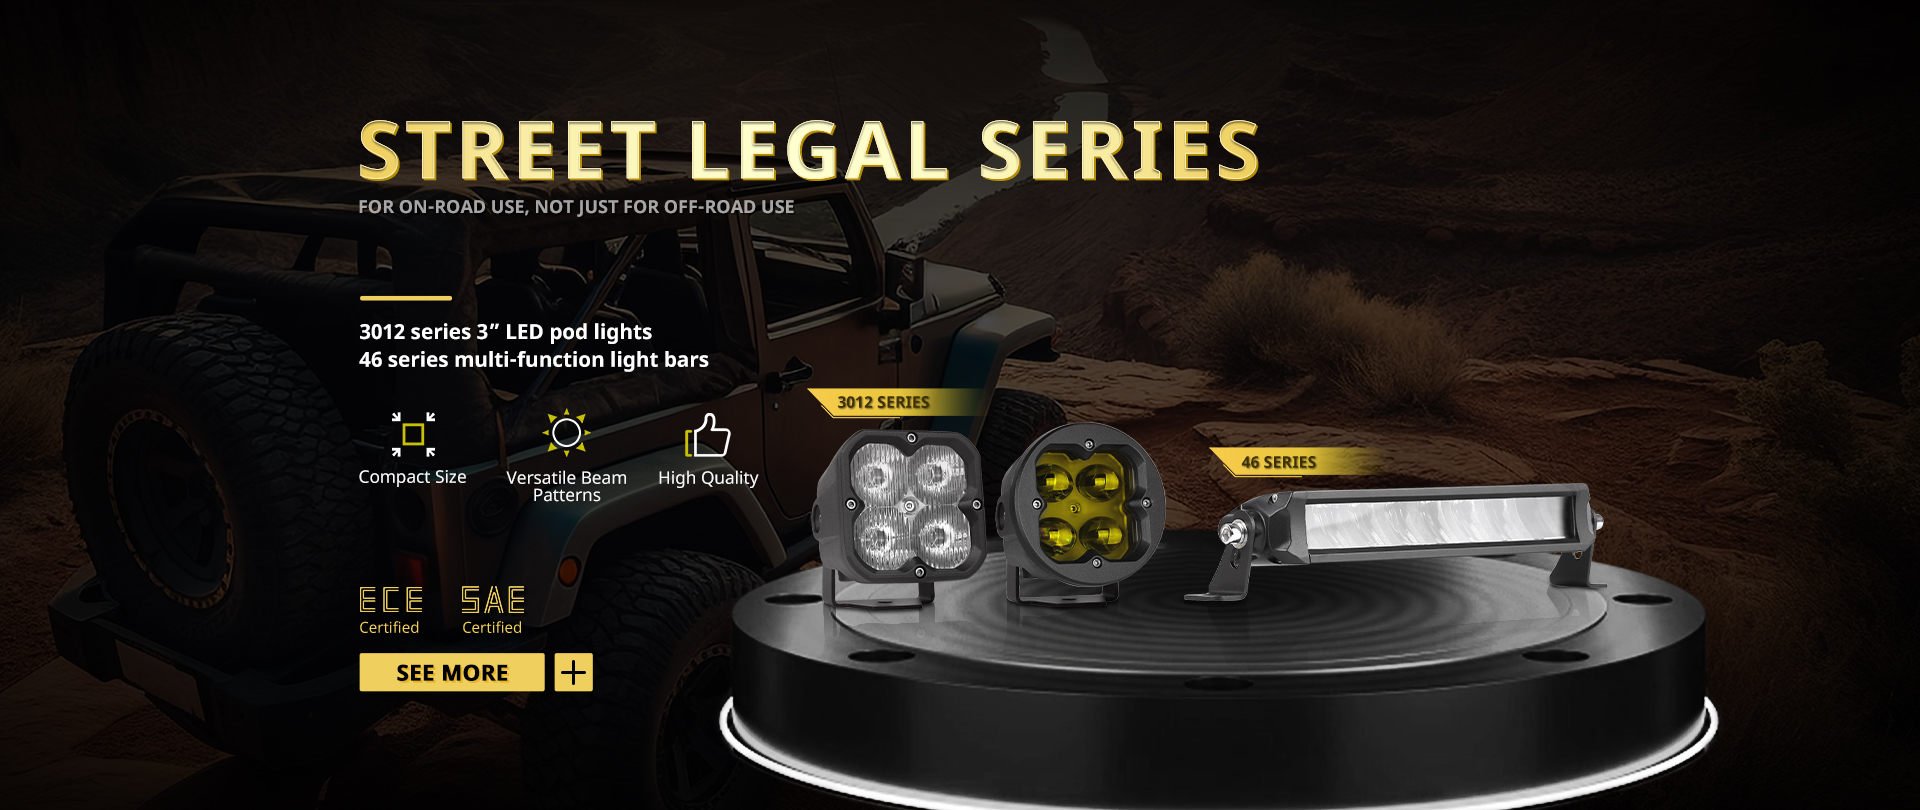 Street legal LED pod lights and light bars